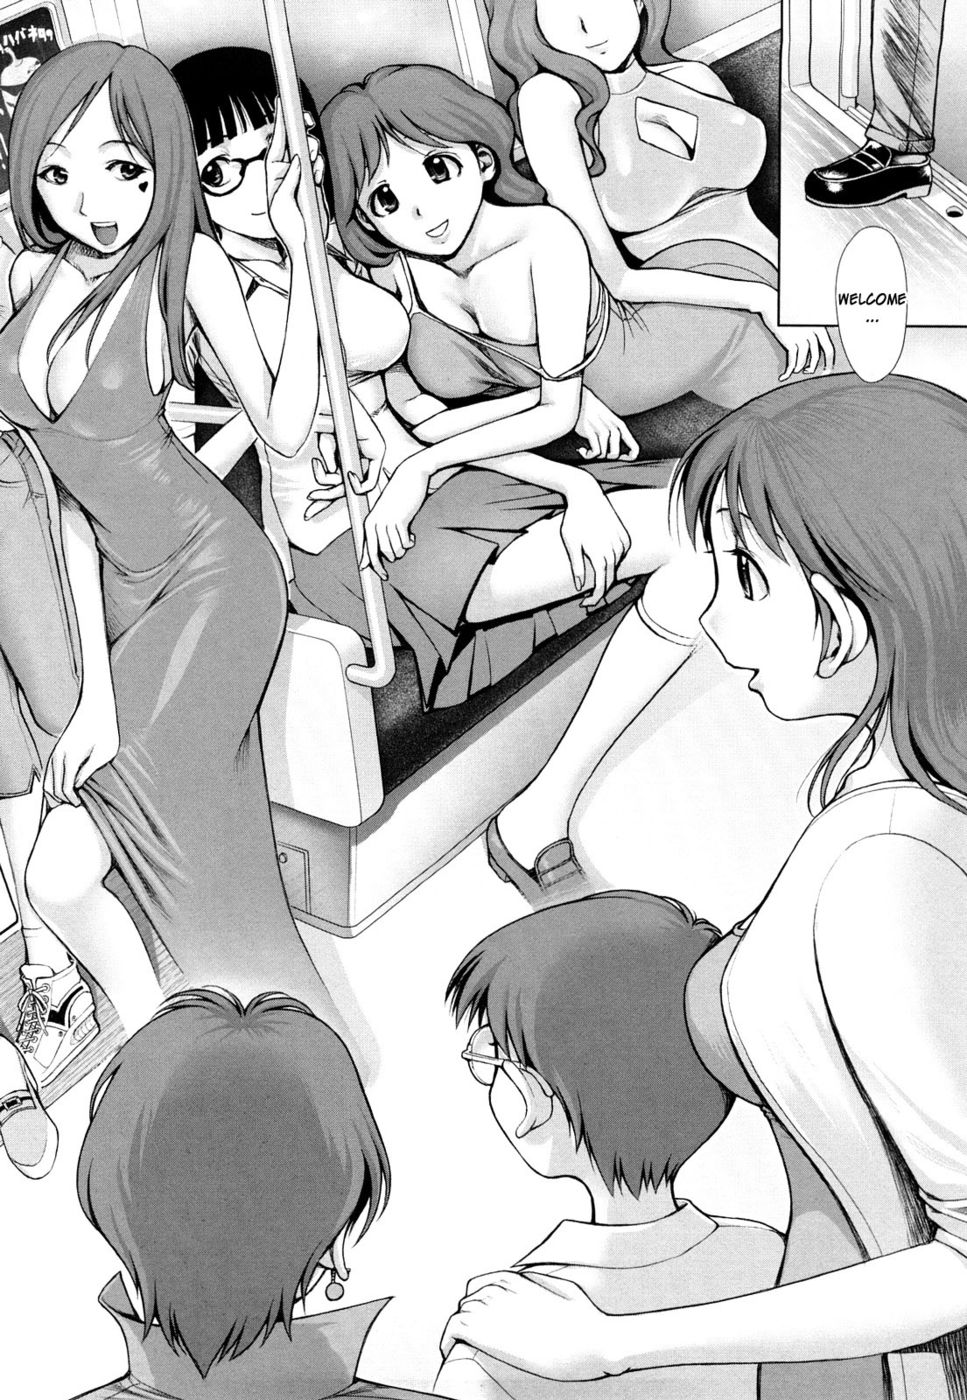 Hentai Manga Comic-Rush Hour XXX-Chapter 2 -Xxx all night long in a rush hour train-2